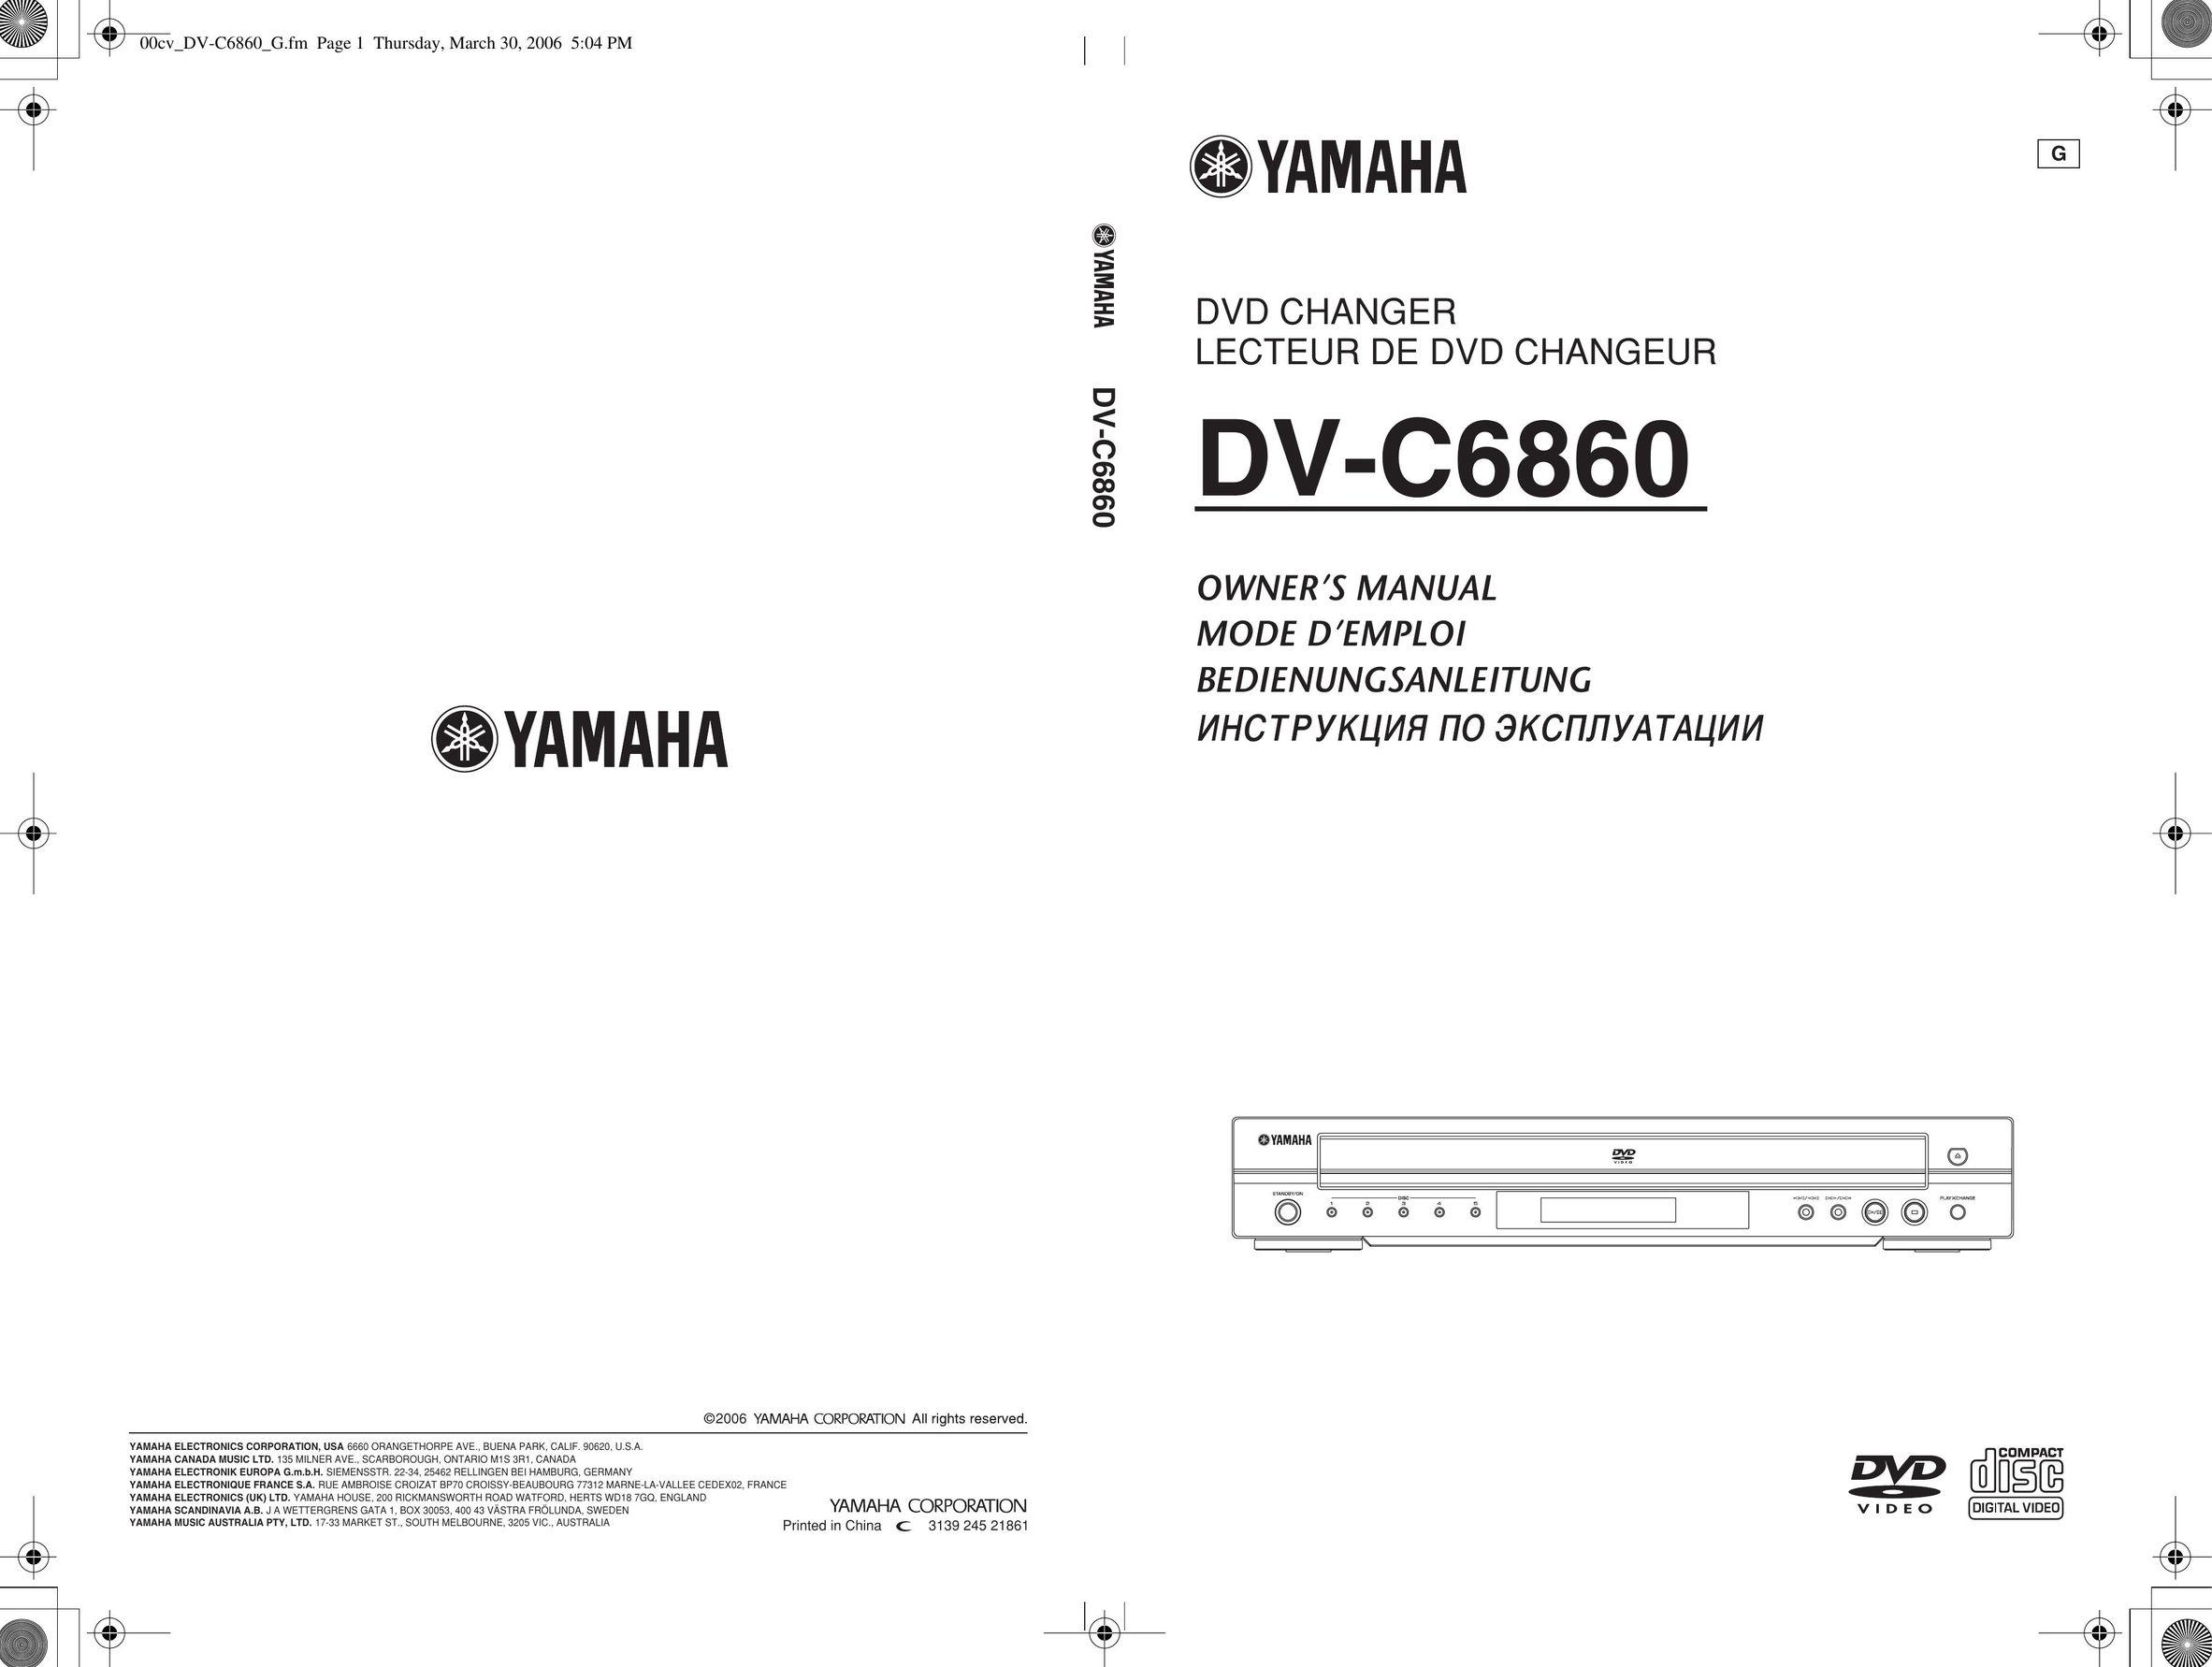 Yamaha DV-C6860 DVD Player User Manual